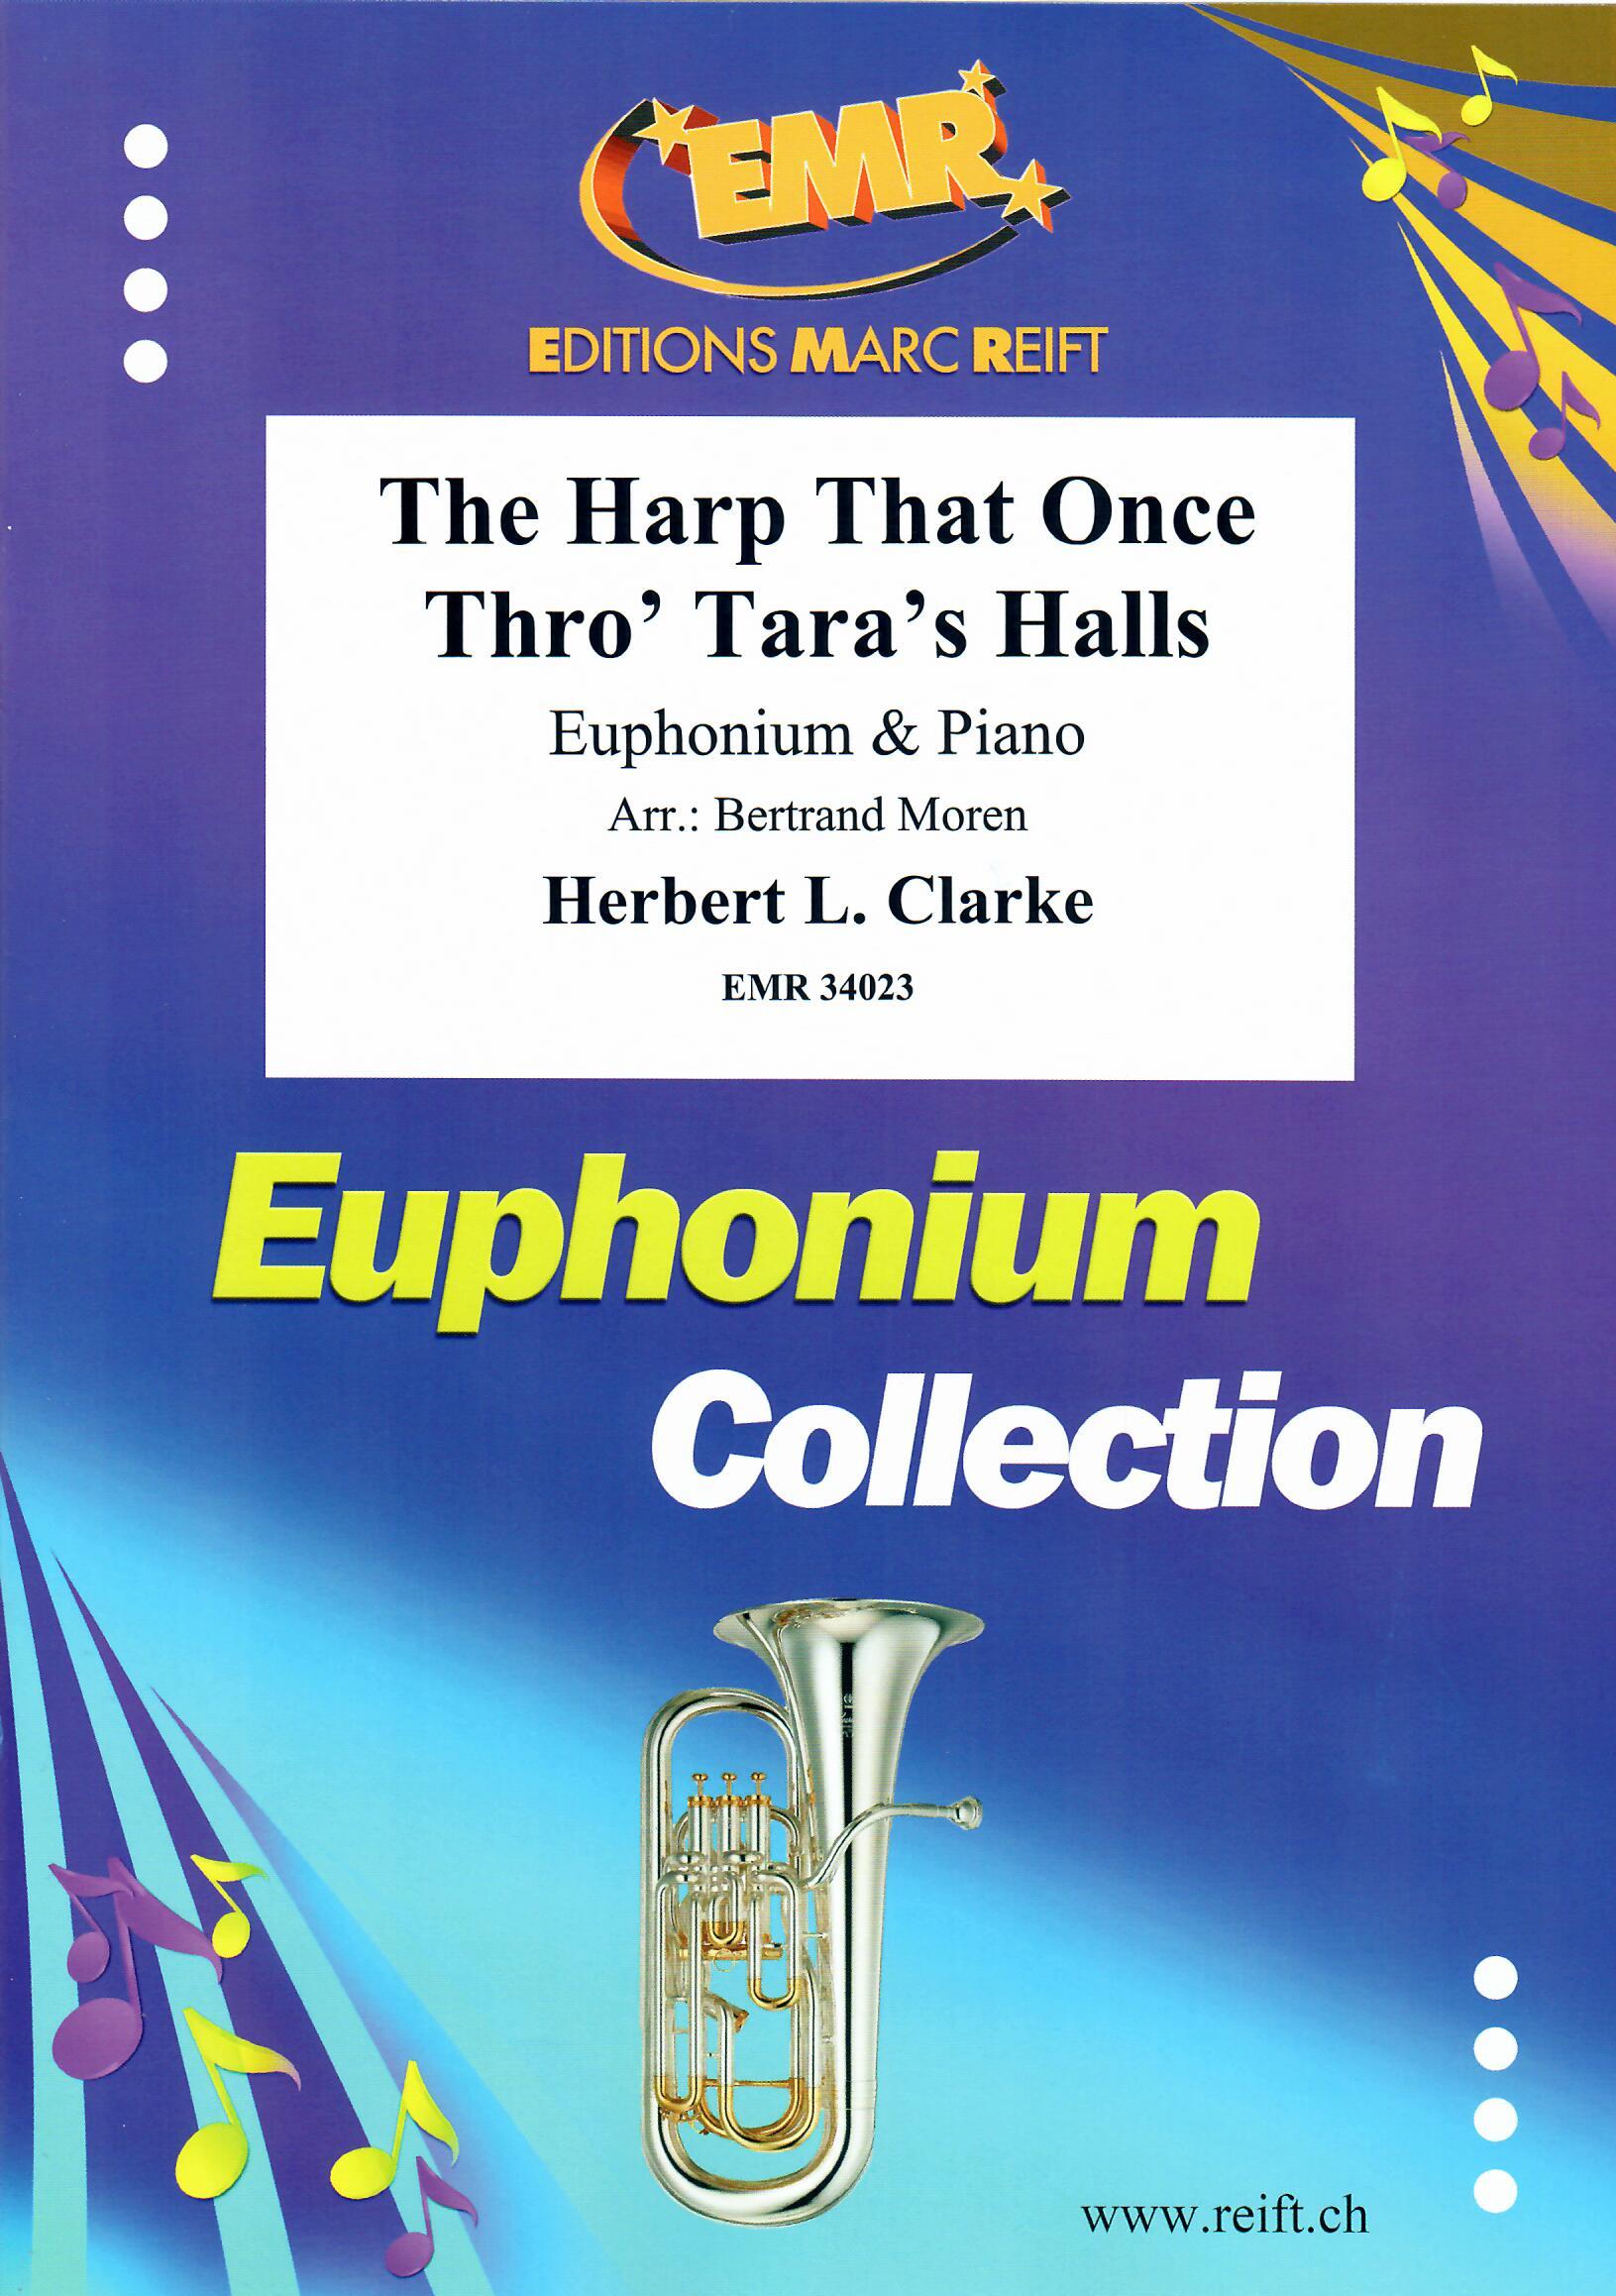 THE HARP THAT ONCE THRO' TARA'S HALLS, SOLOS - Euphonium